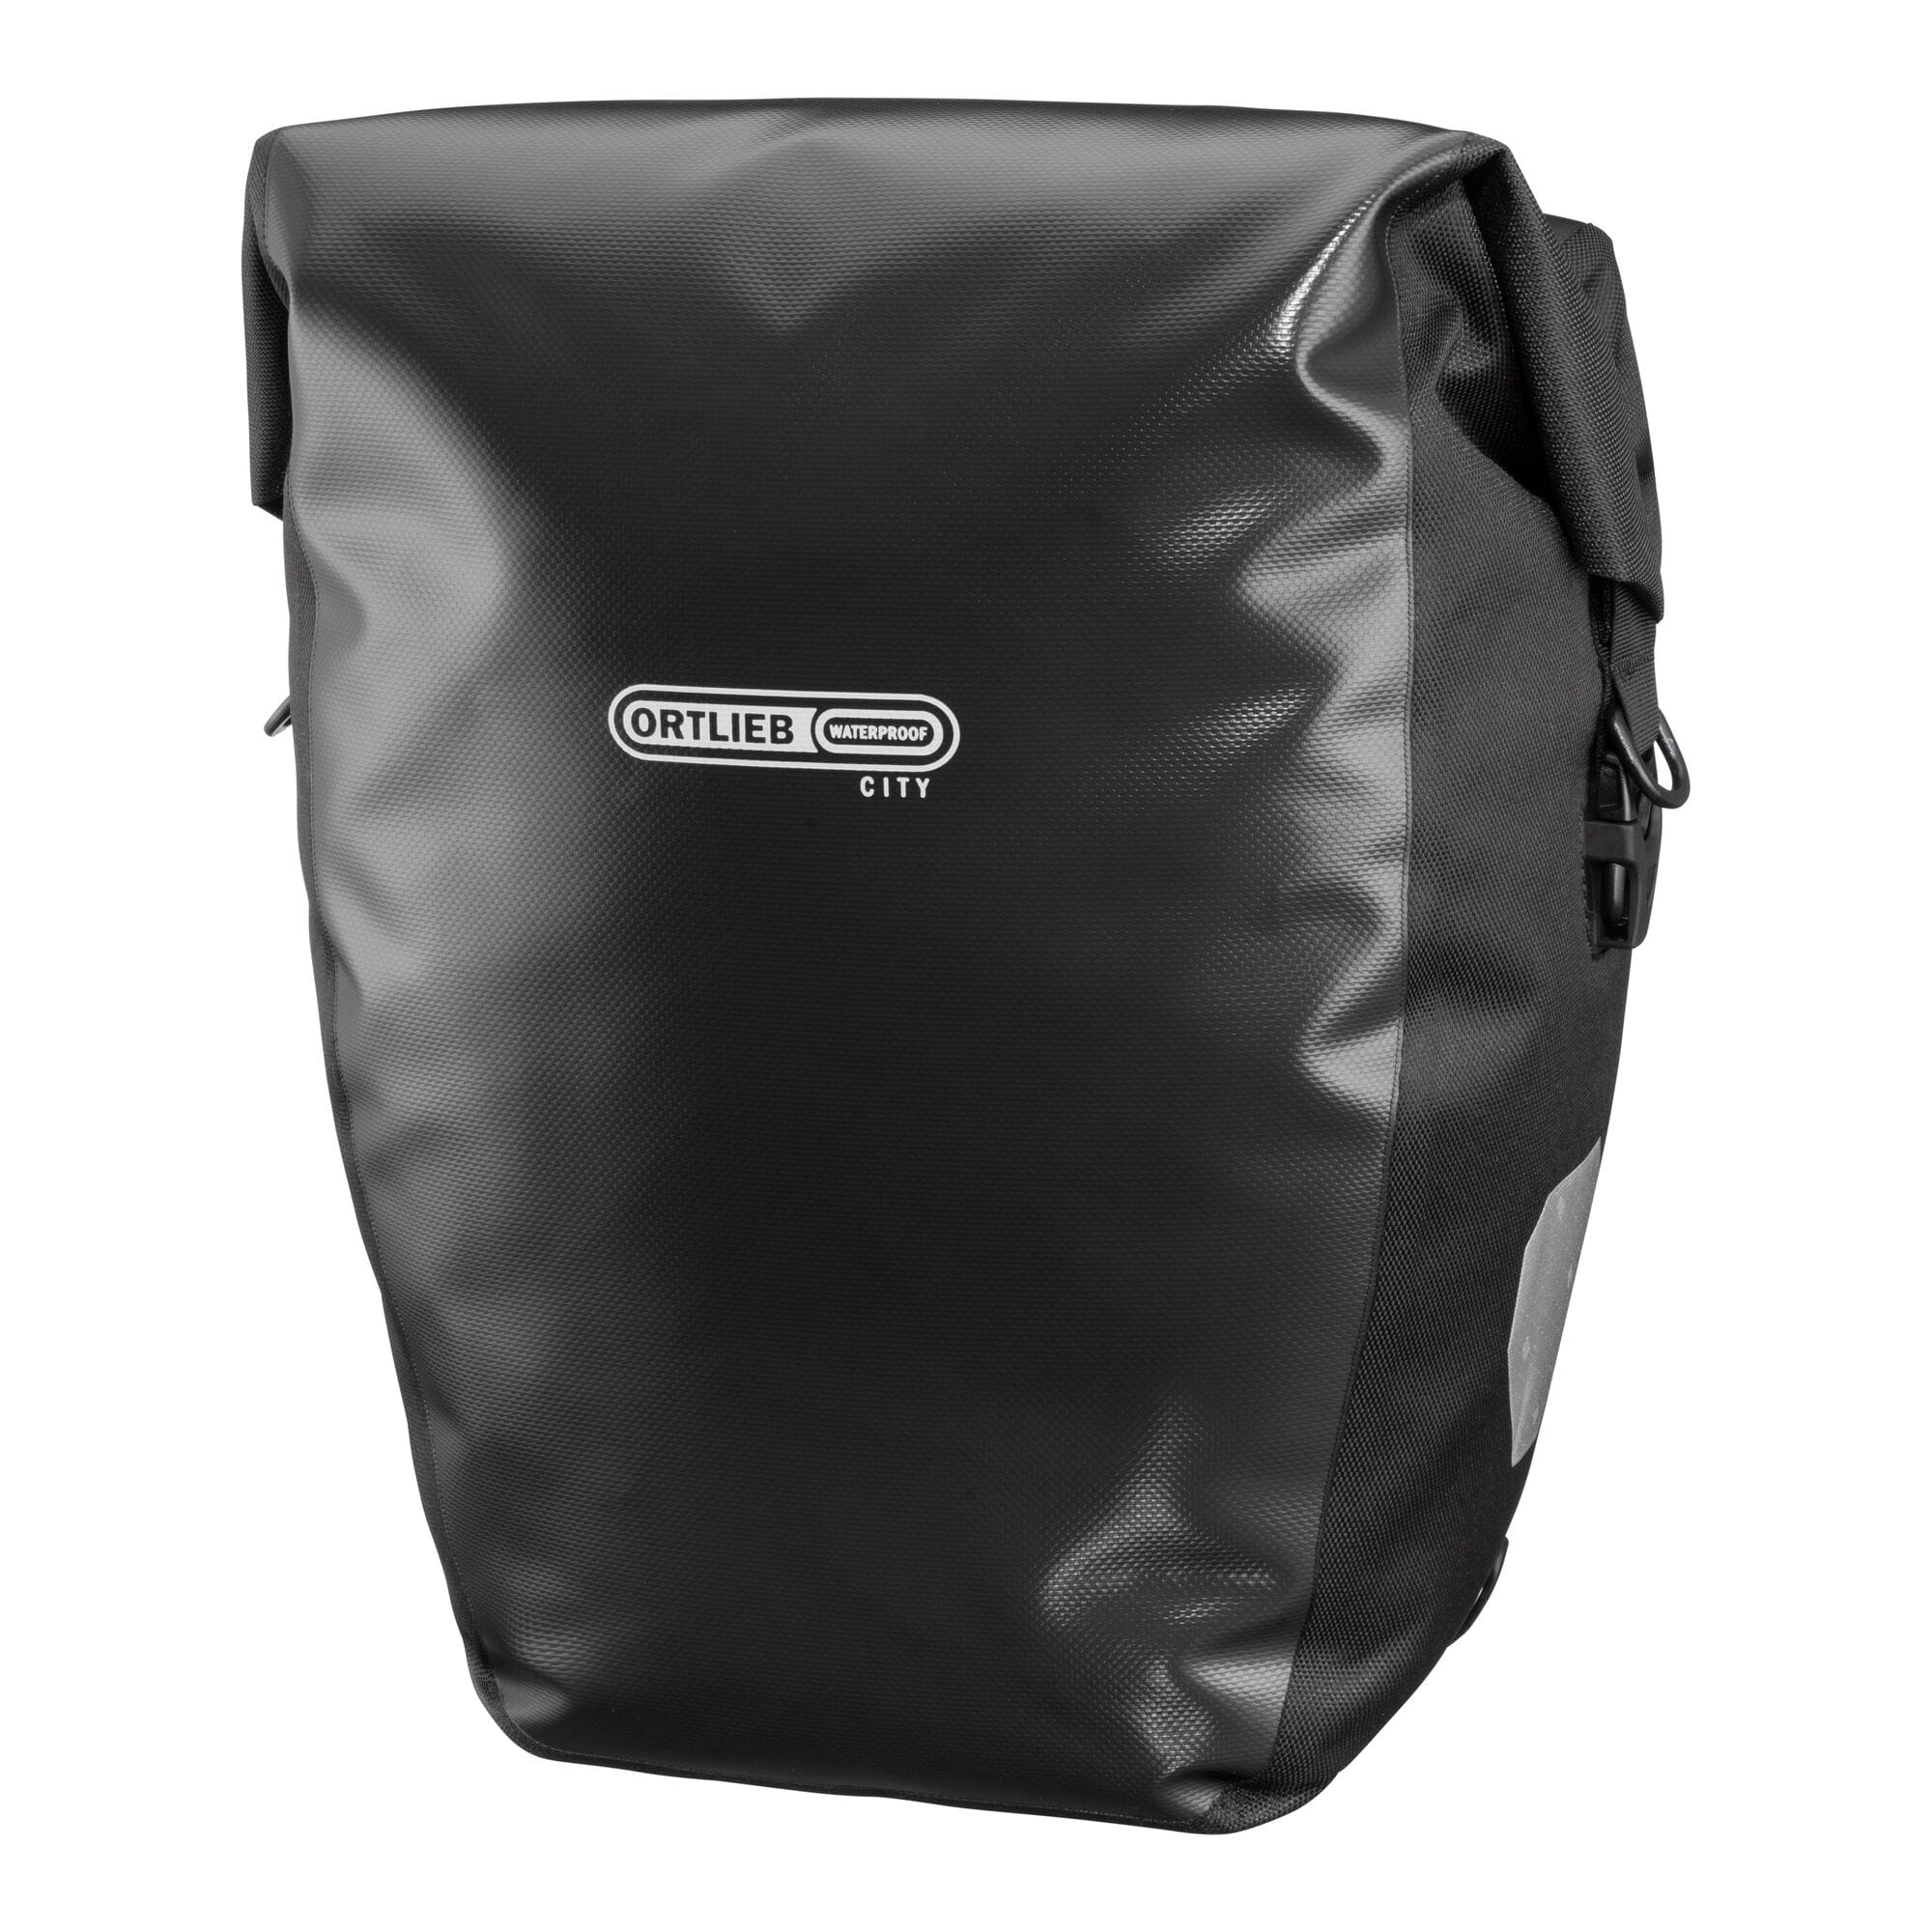 Ortlieb Back-Roller City Rear Pannier Bags Pair